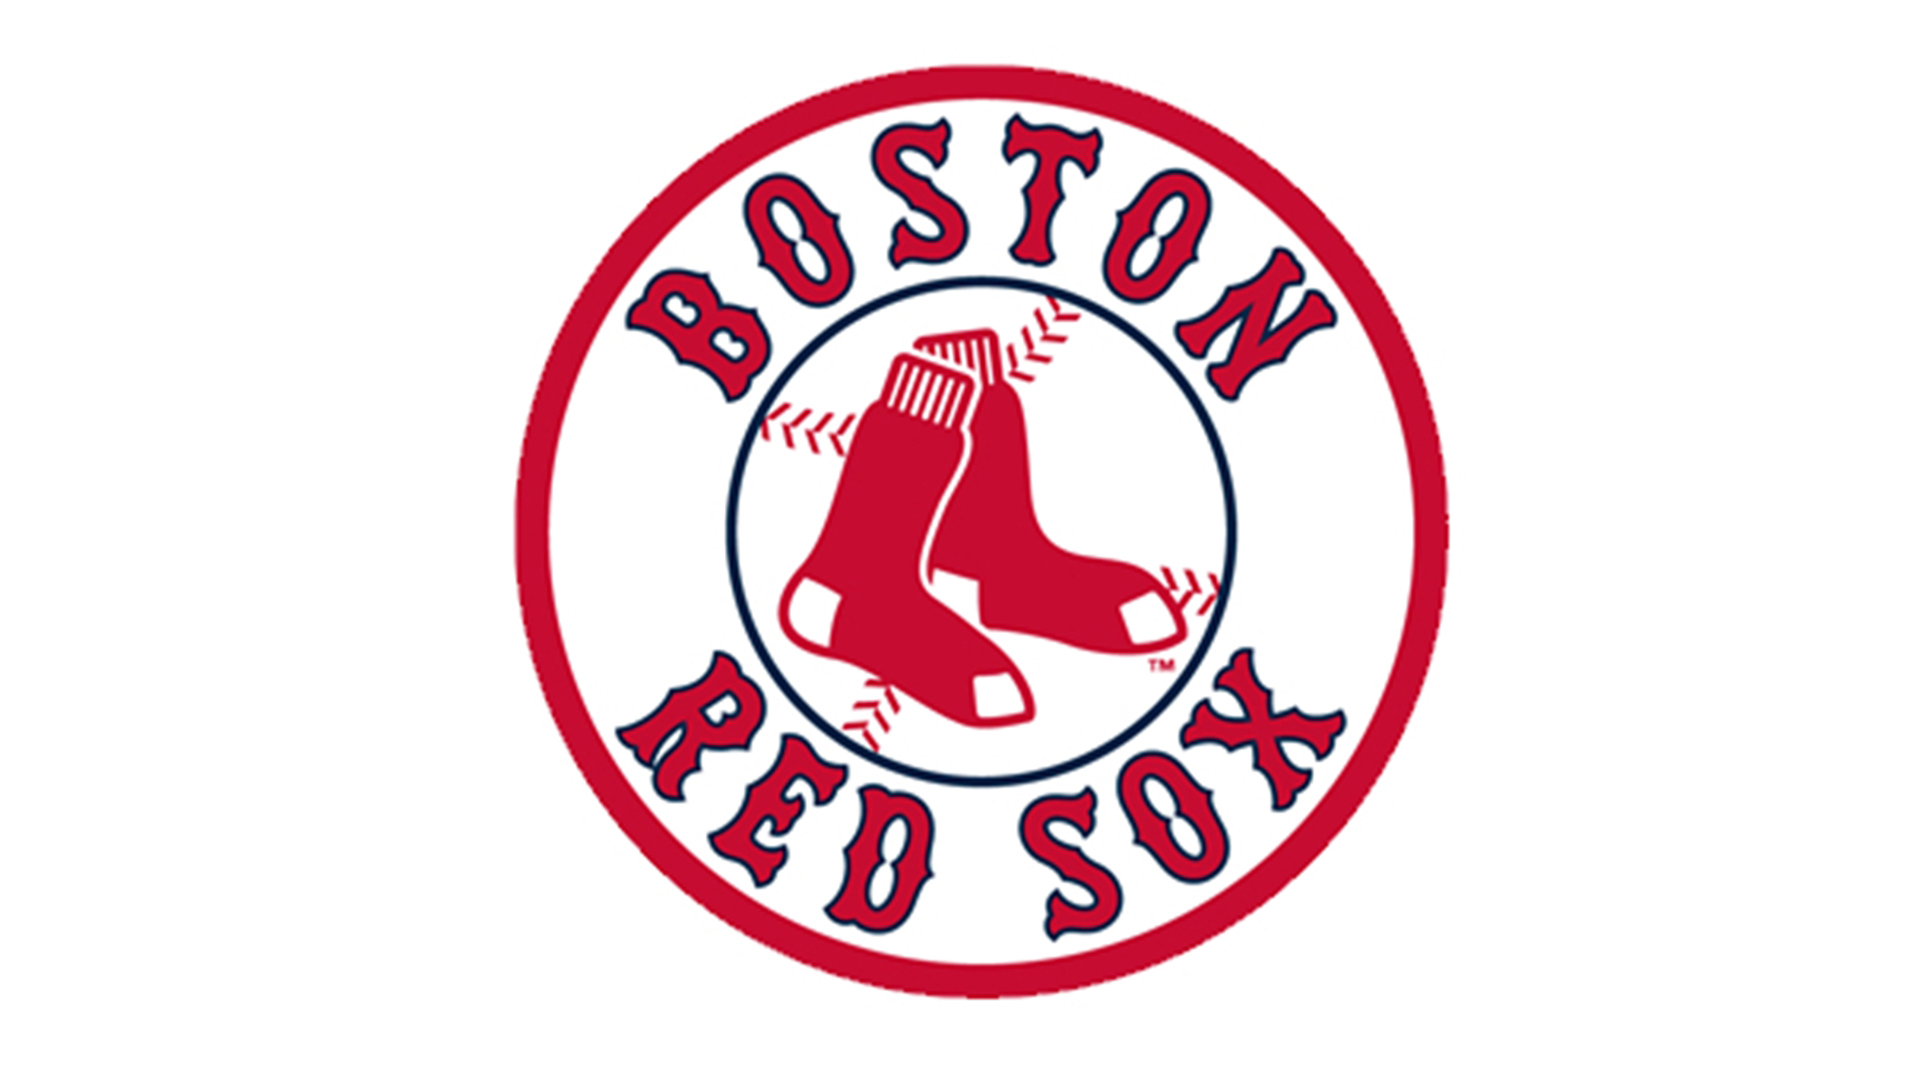 Boston Red Sox Backgrounds Free Download | PixelsTalk.Net